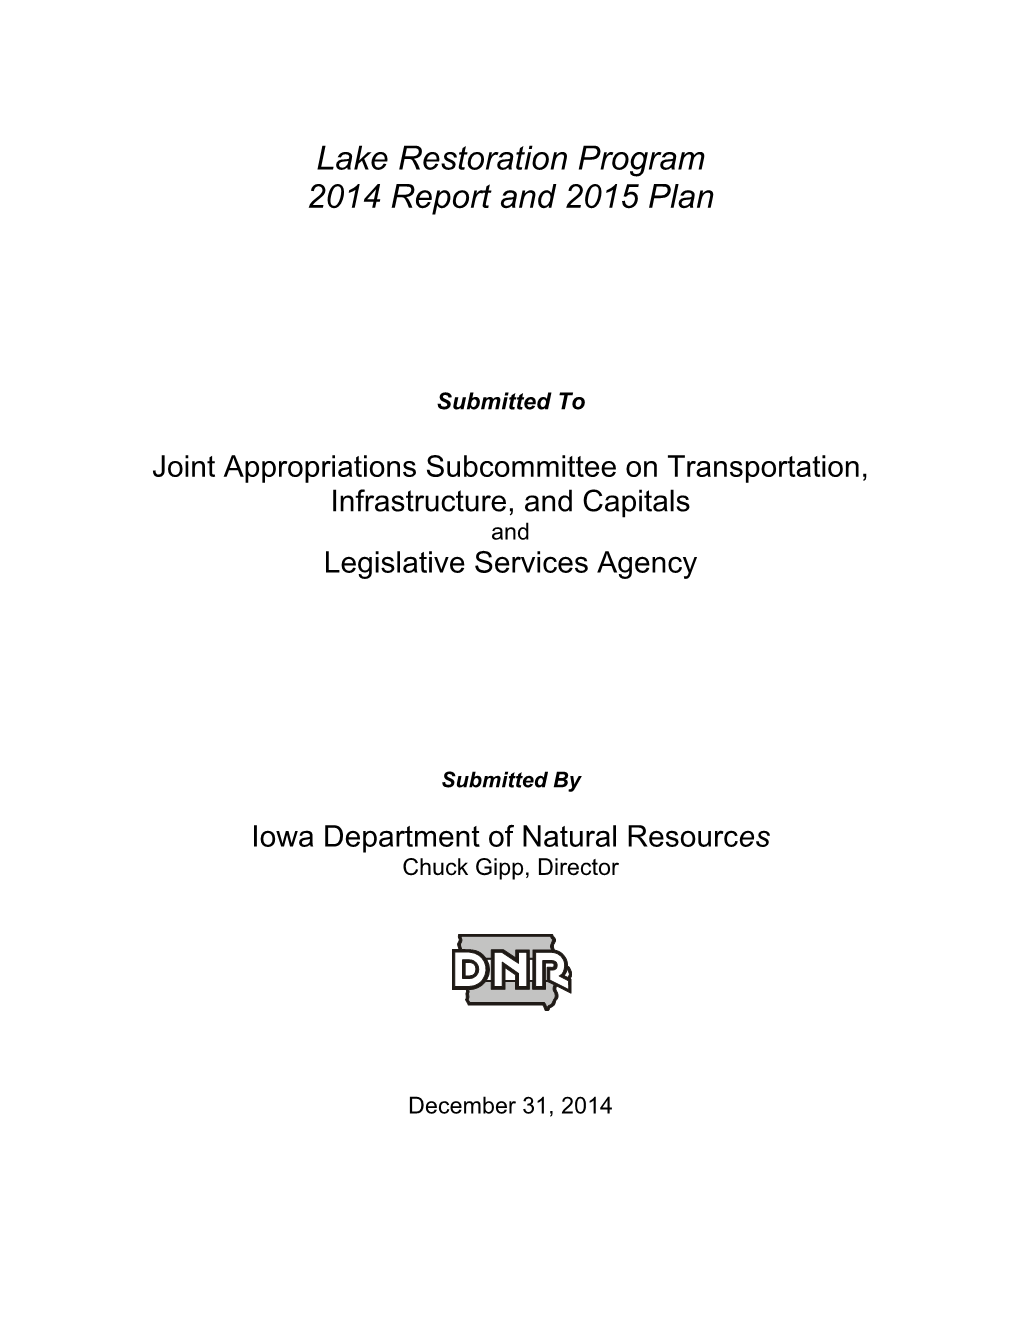 Lake Restoration Program 2014 Report and 2015 Plan